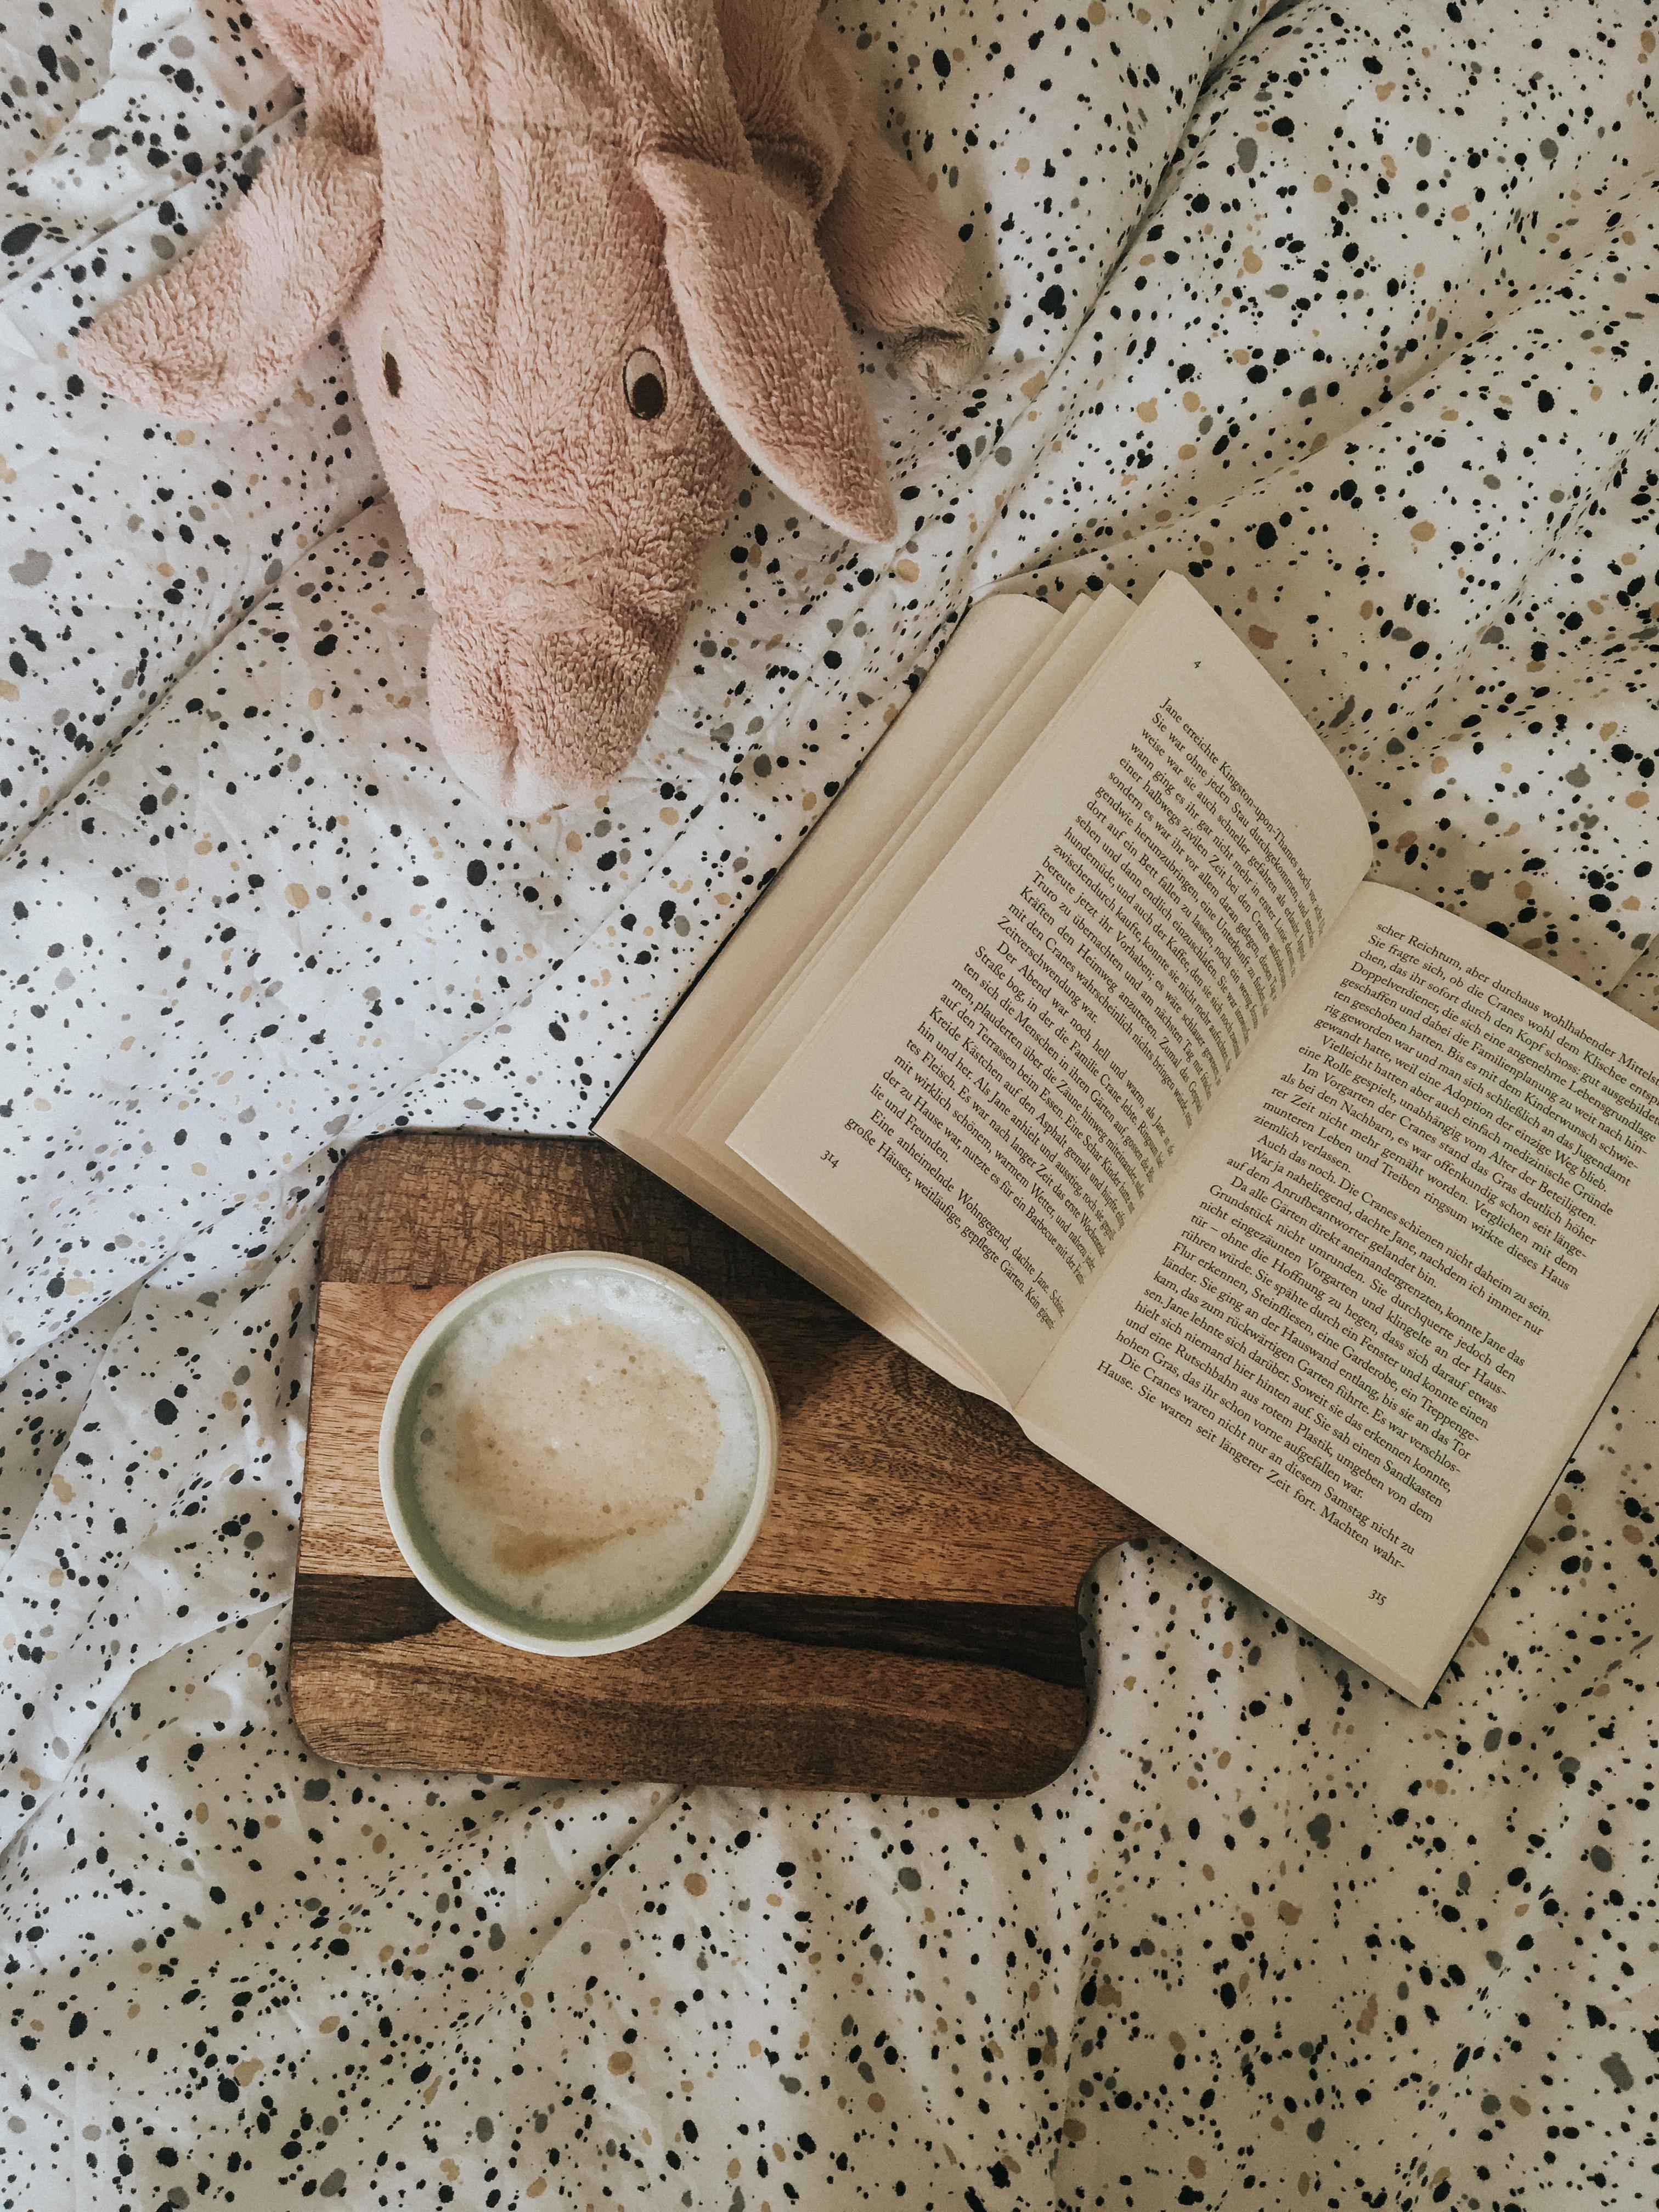 Sunday 🤍
Kaffee, lesen, O.C.California. Sonntag eben 😊 #sunday #cozy #slowdown #hygge #booklover #coffee #coffeelover